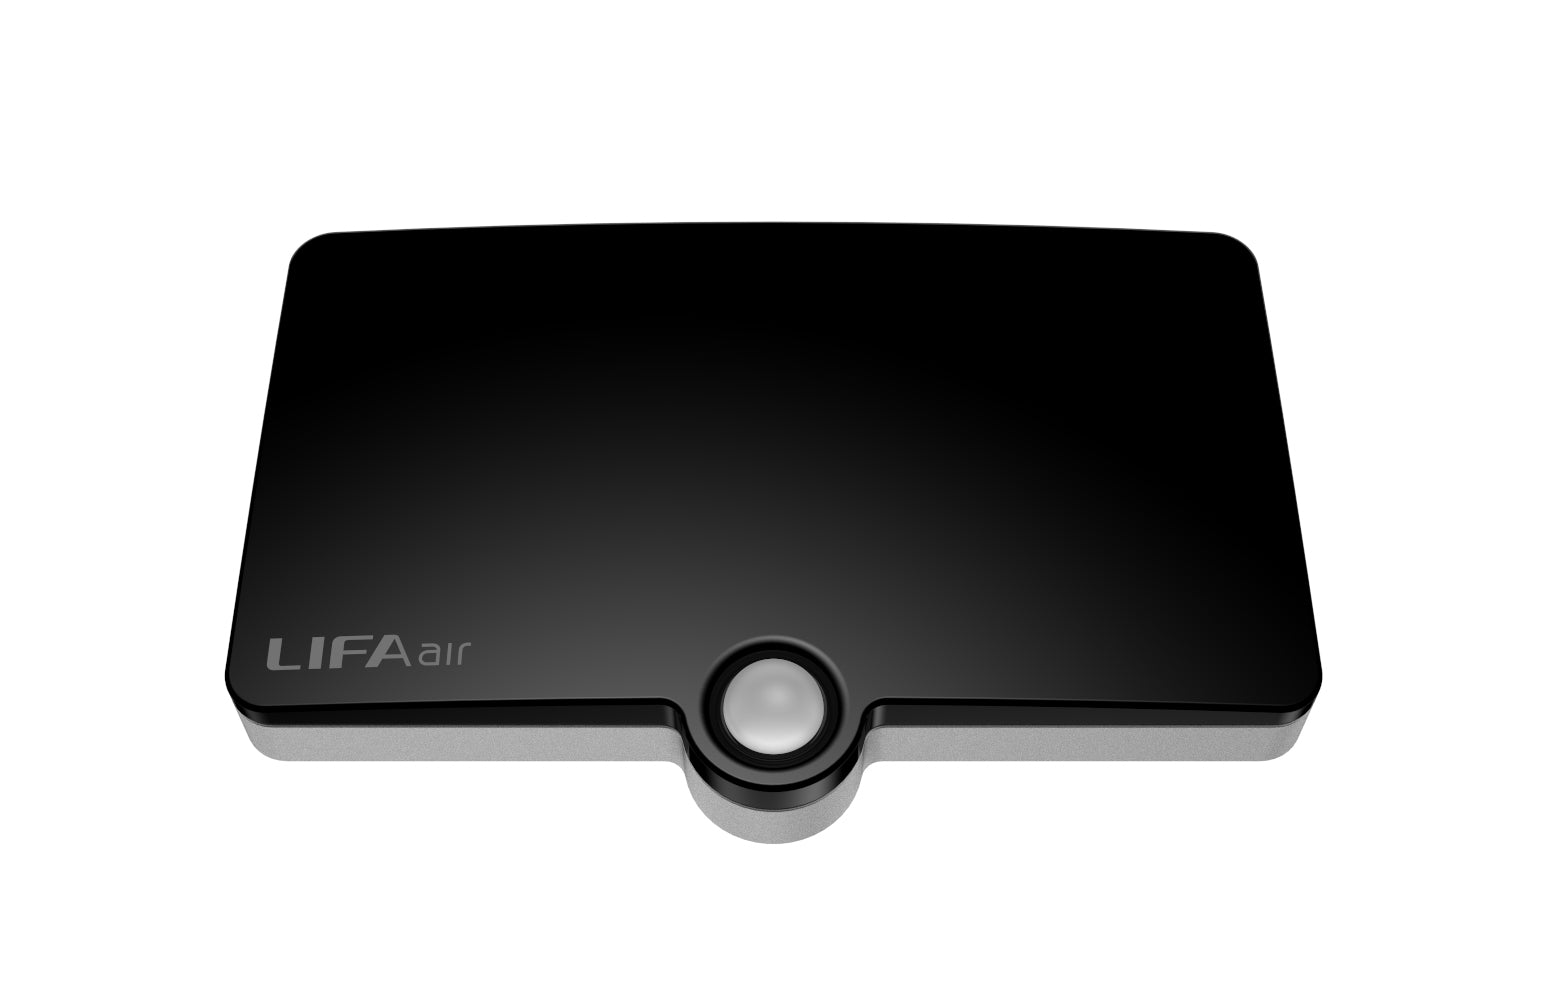 Lifa Air LAM03 Smart Wall Monitor front device off